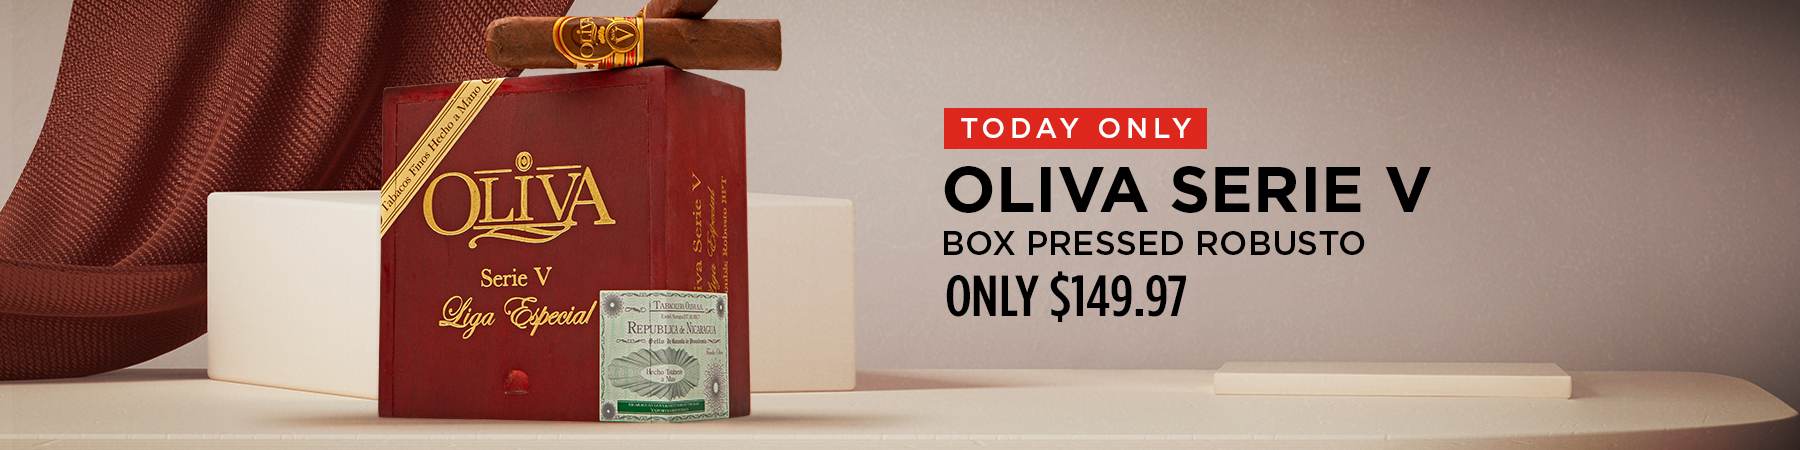 Oliva Serie V Box Pressed Robusto Just $149.97